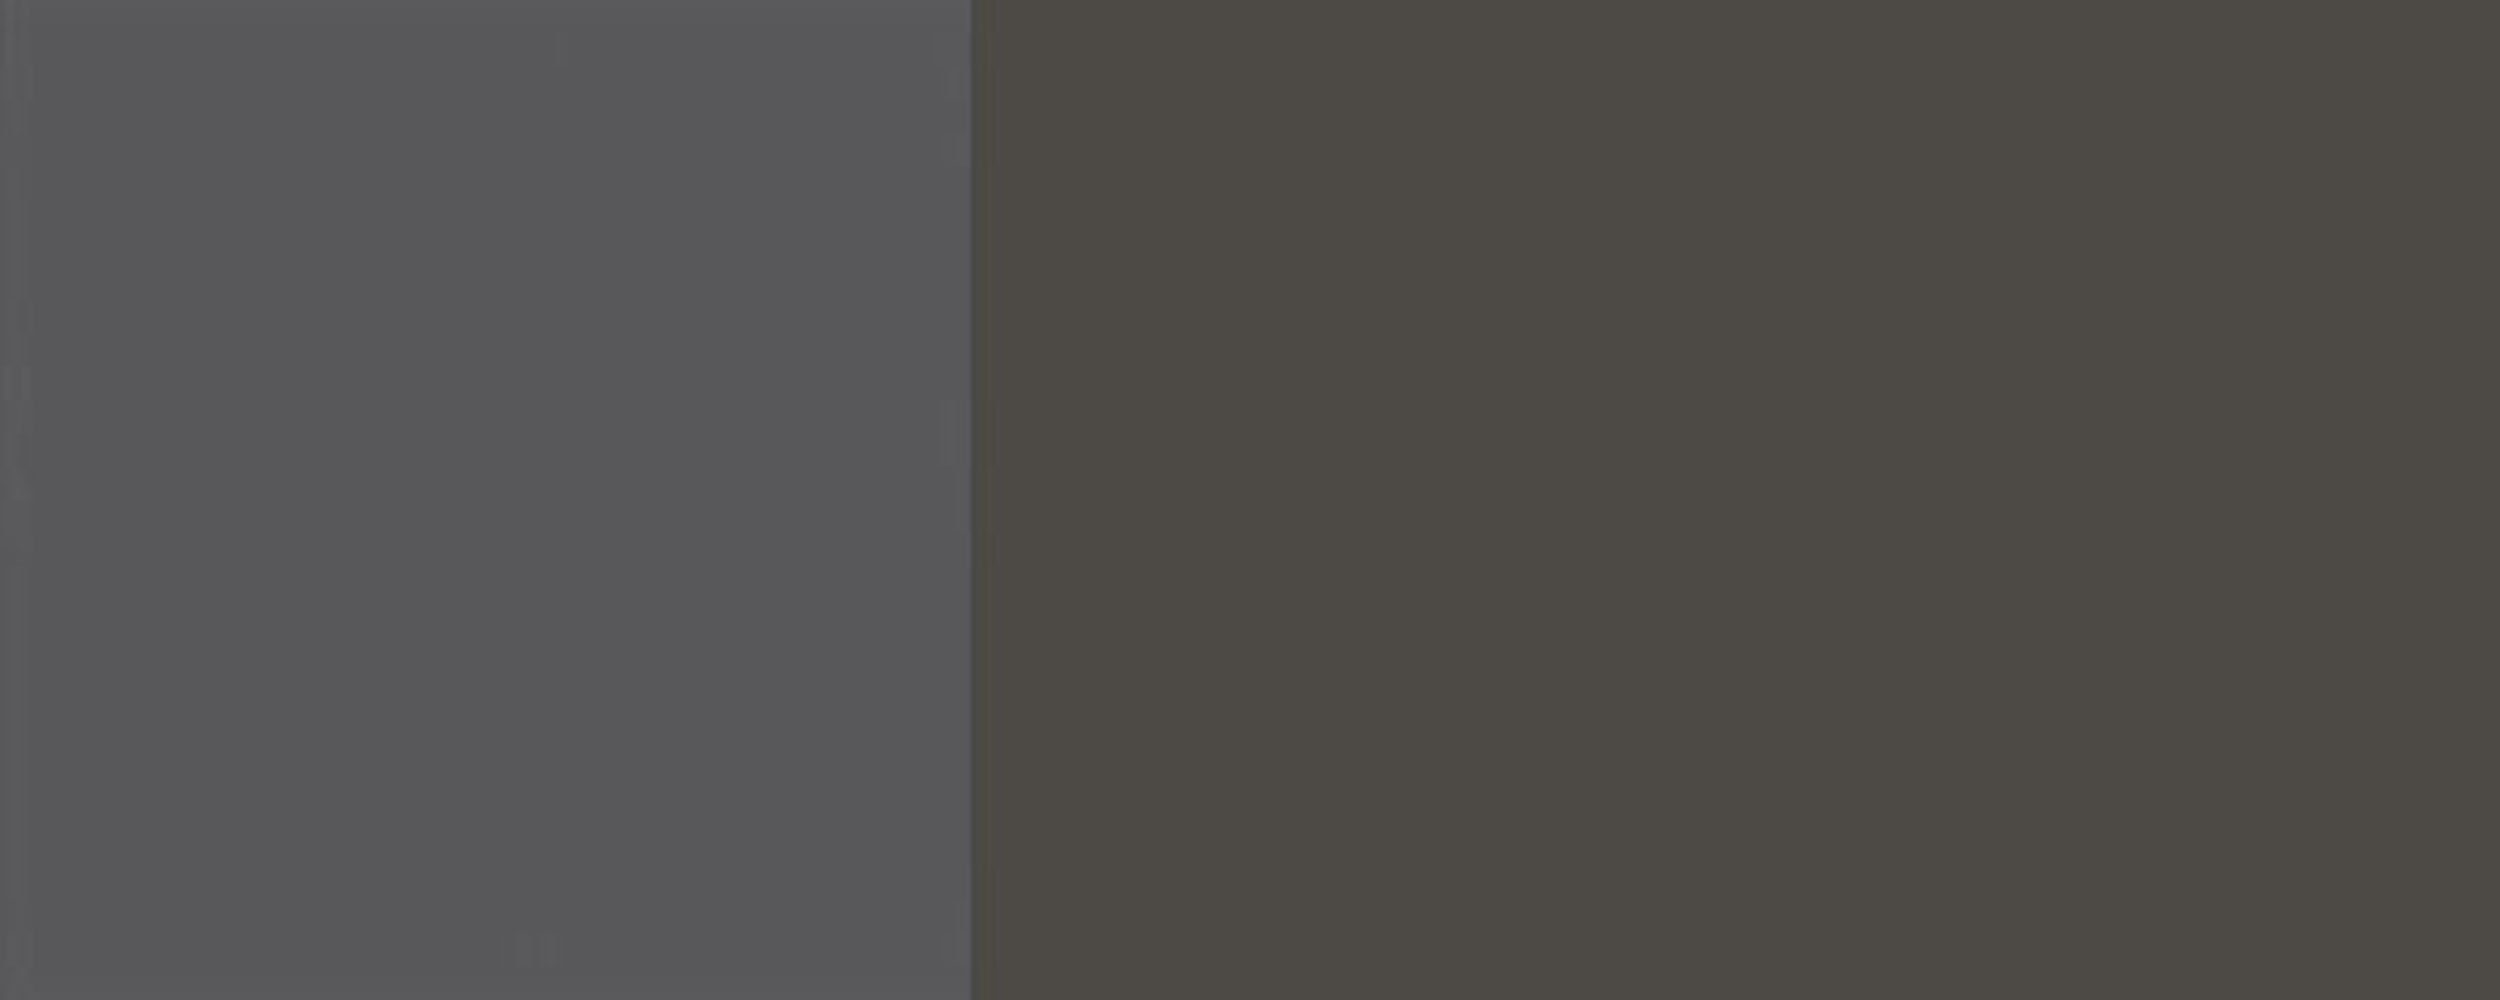 Feldmann-Wohnen Sockelblende und matt 45cm 7022 RAL umbragrau wählbar Korpusfarbe Front- teilintegriert Tivoli